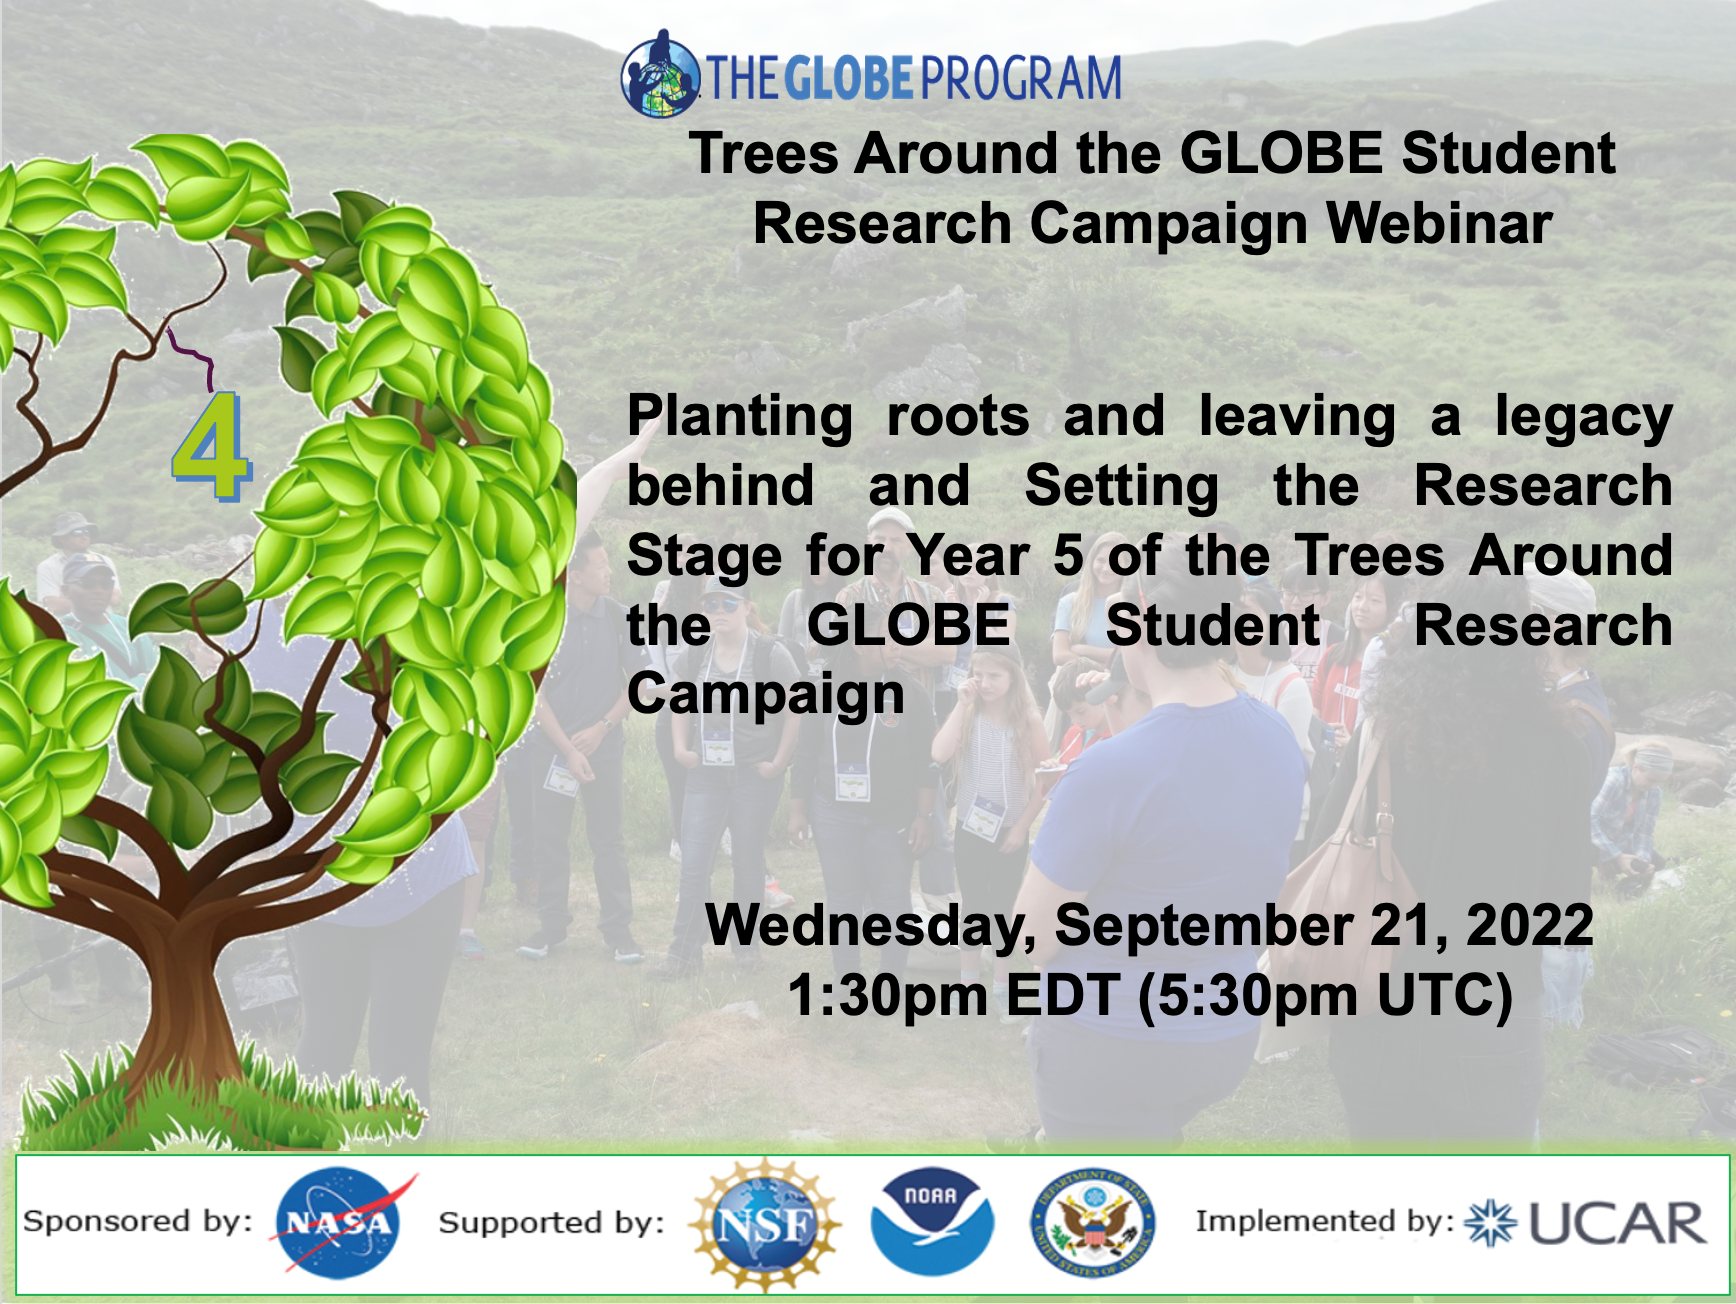 Trees Around the GLOBE campaign webinar, 21 September, shareable